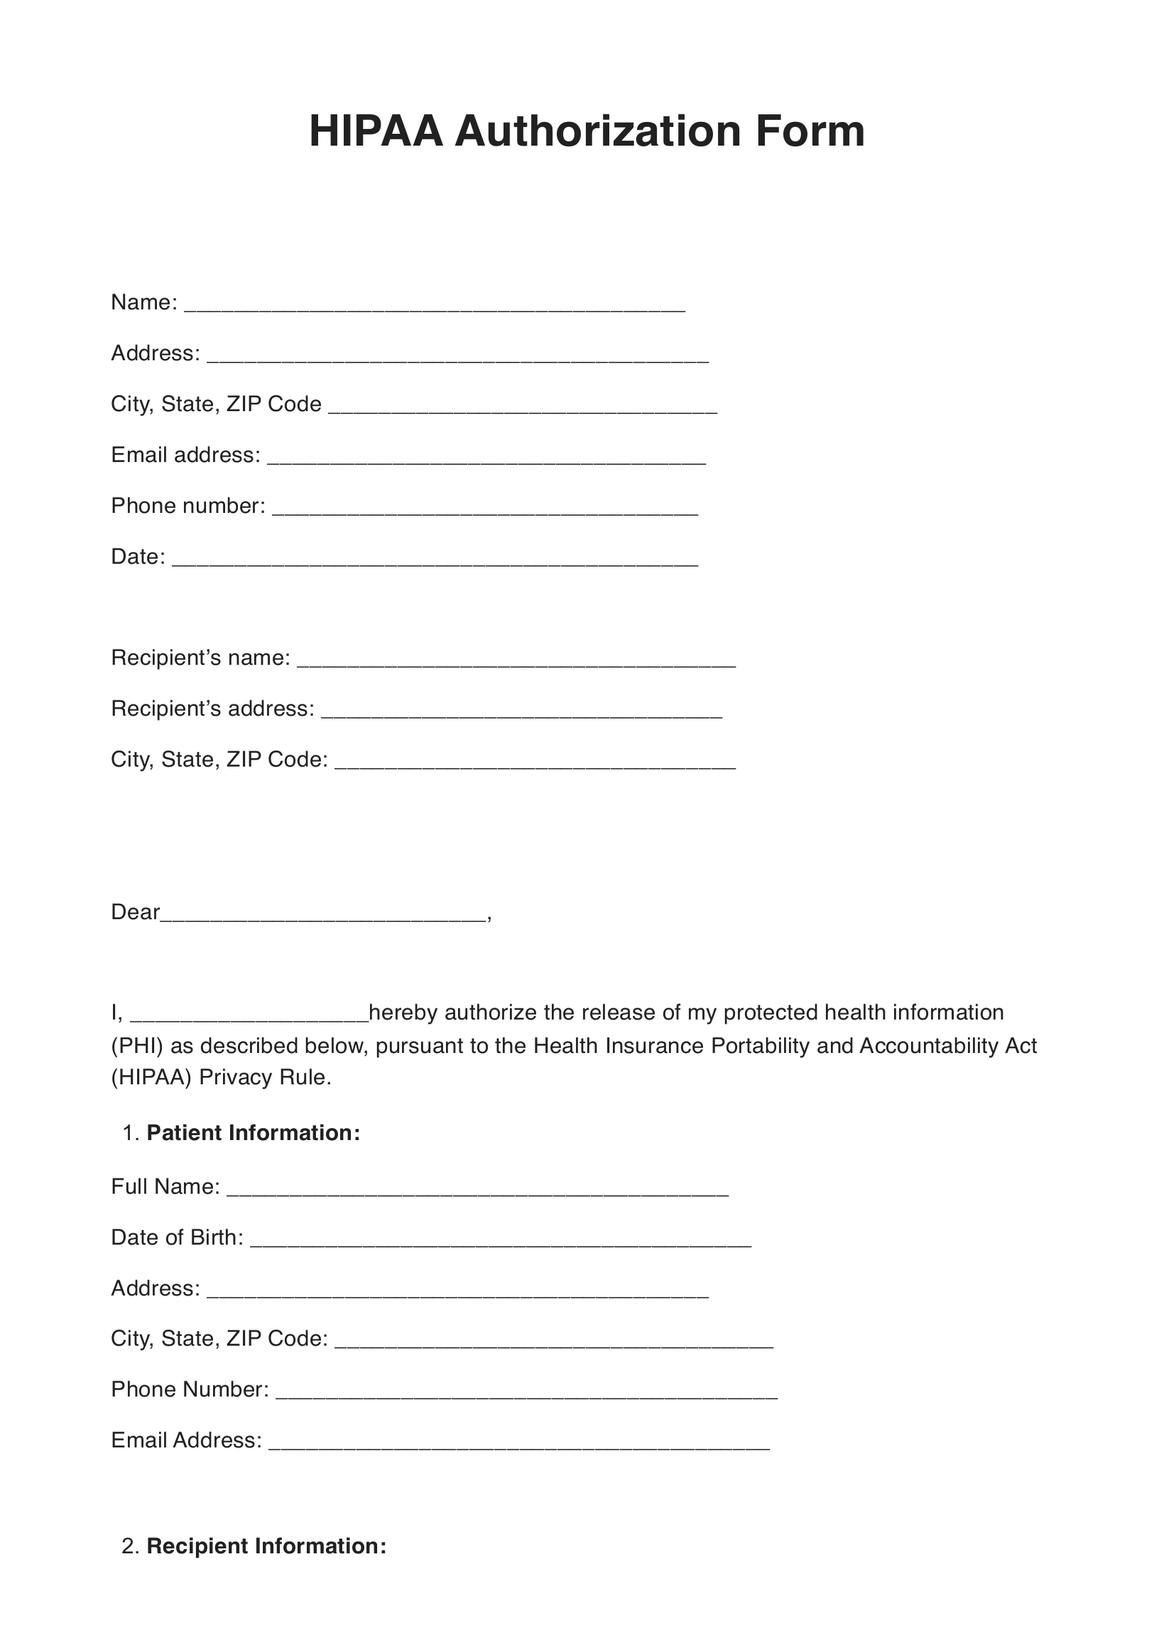 HIPAA Authorization Form PDF Example